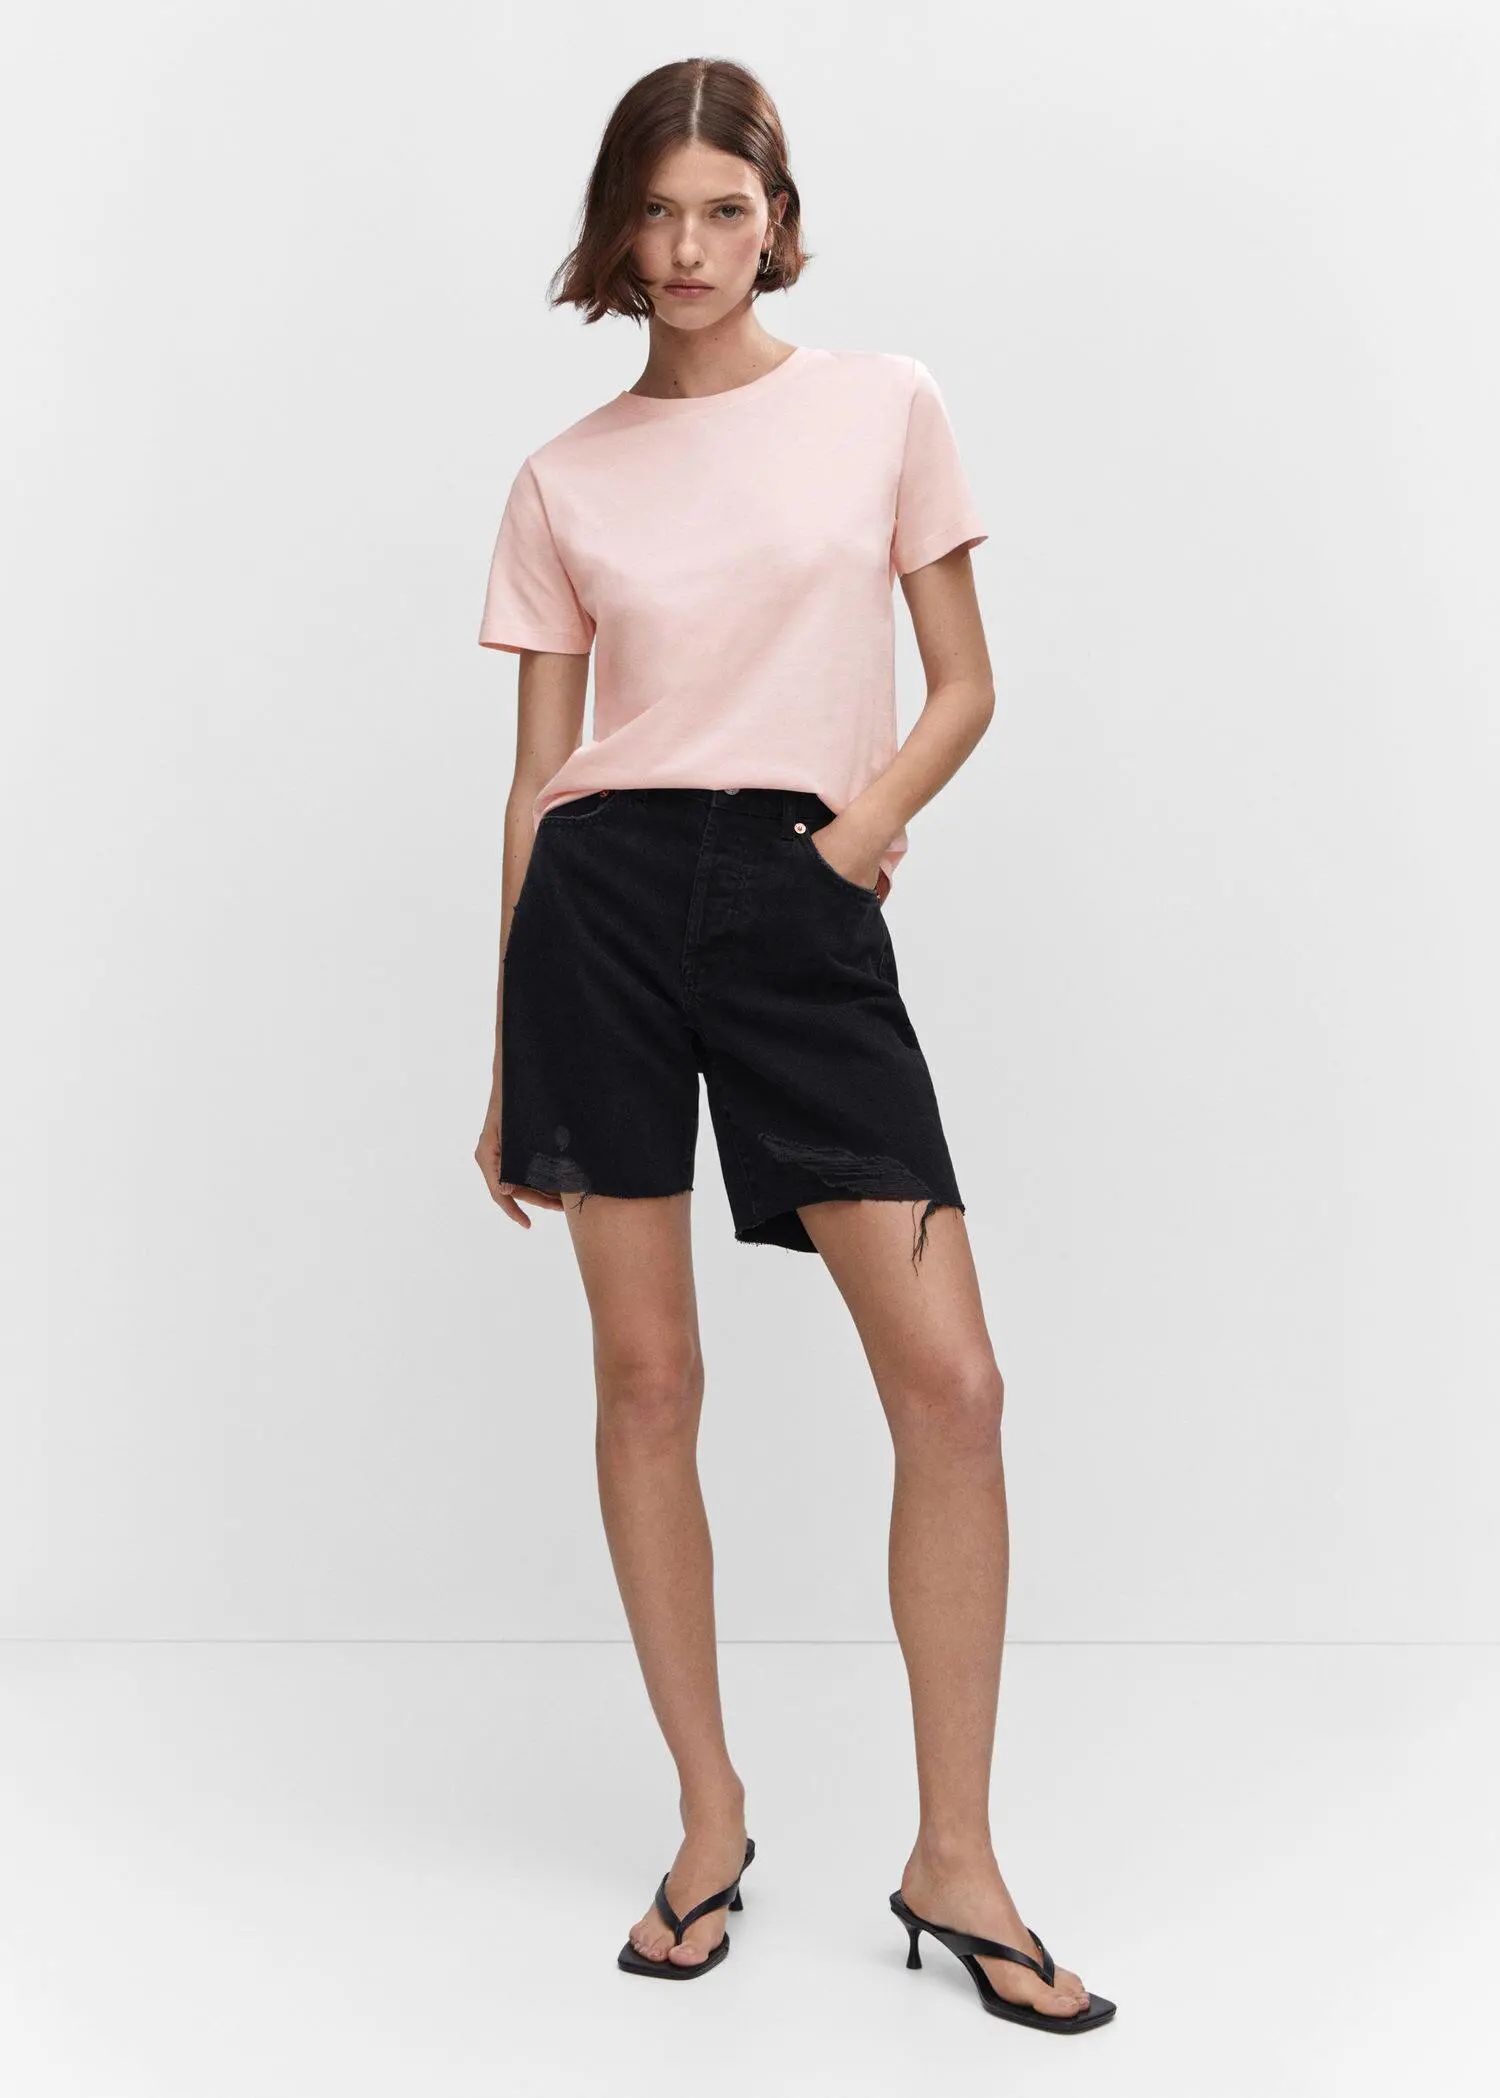 Mango 100% cotton T-shirt. a woman wearing black shorts and a light pink shirt. 